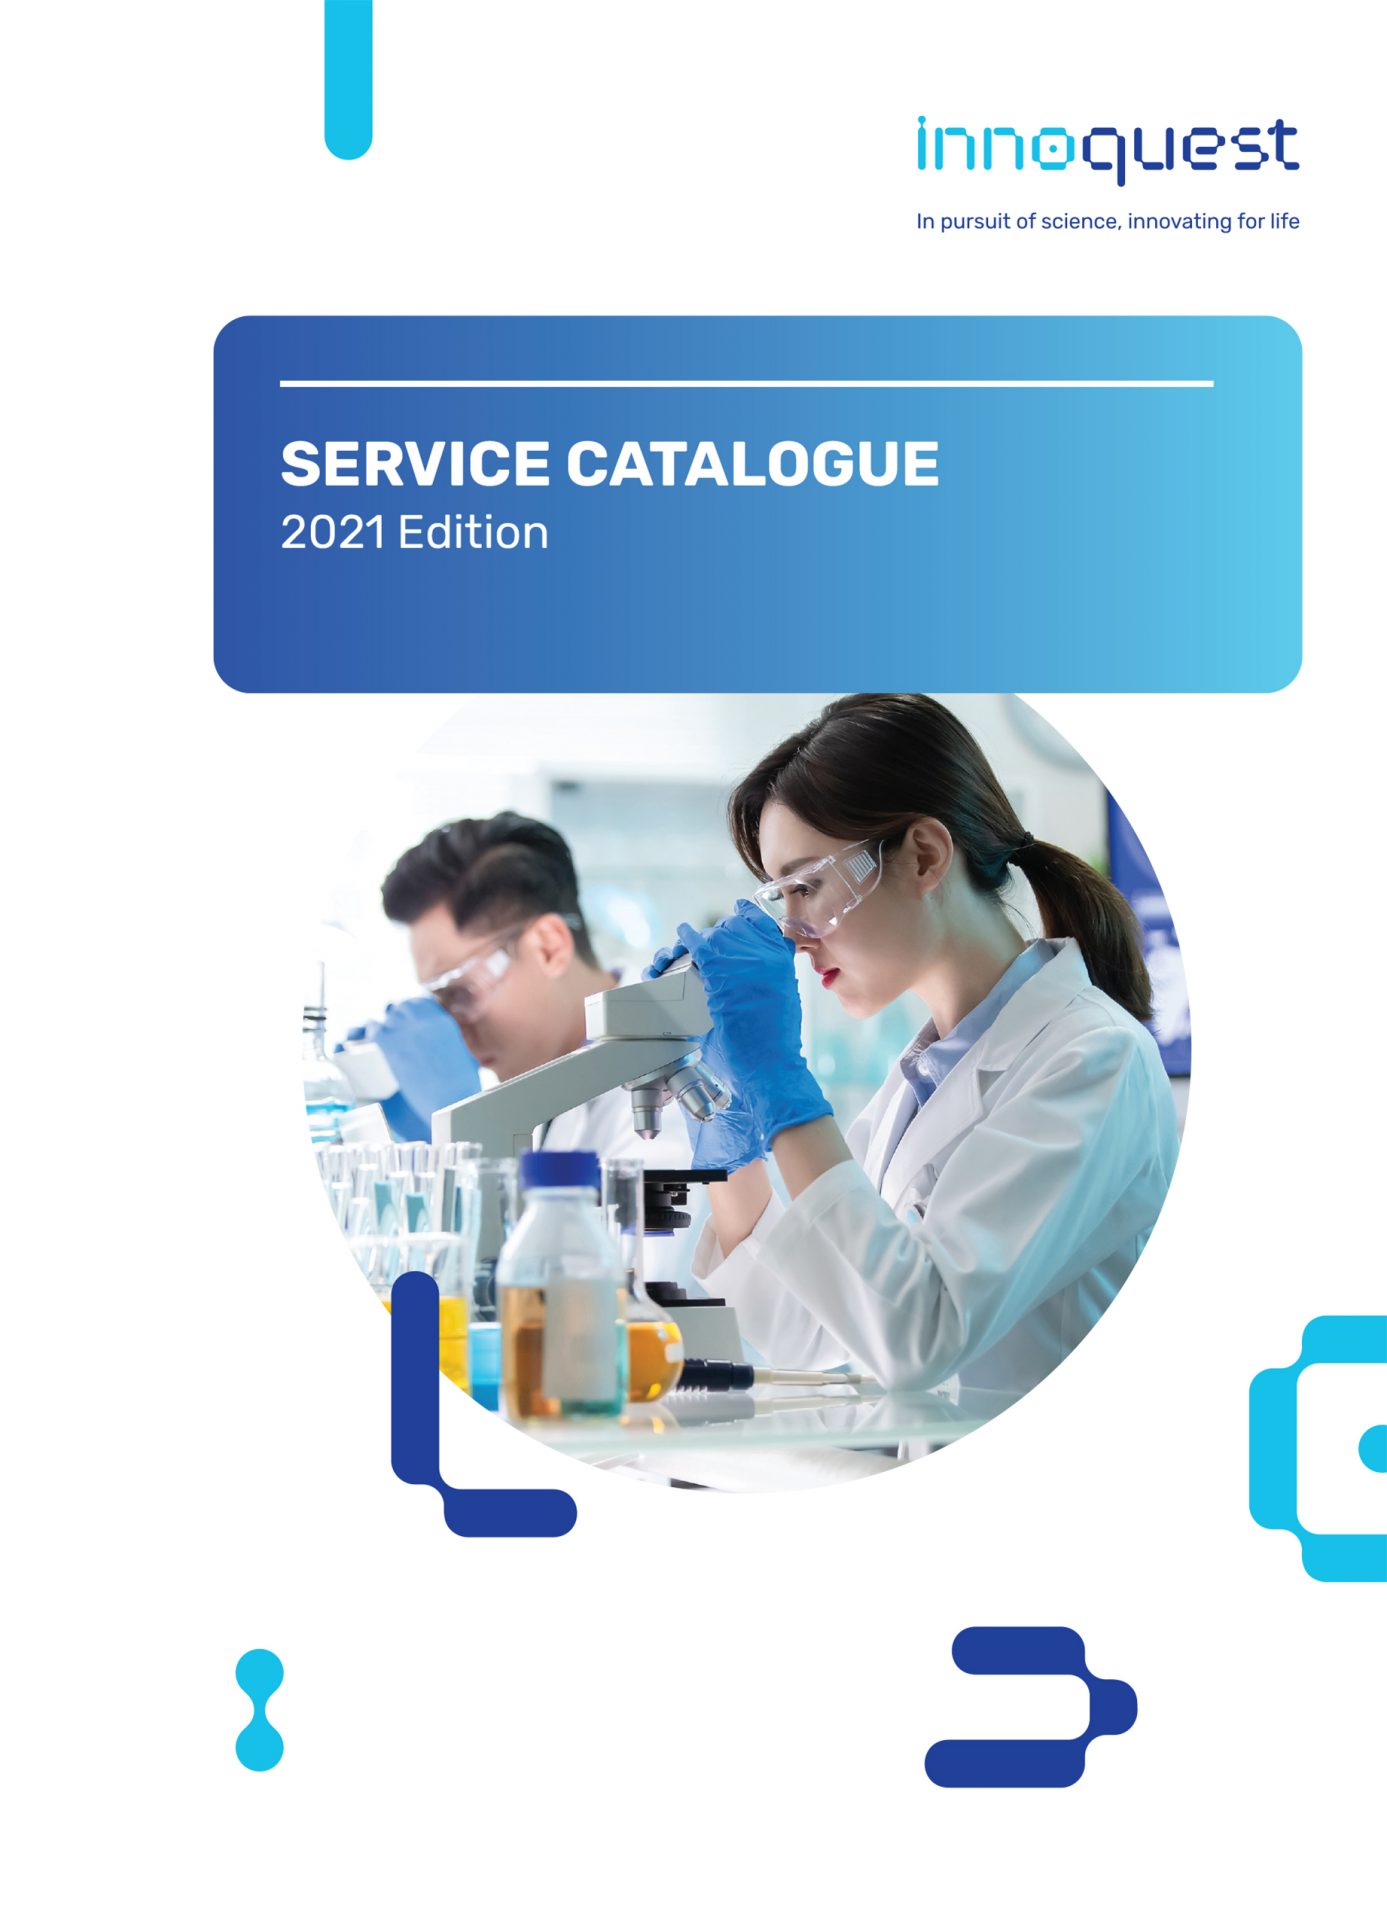 Innoquest Service Catalogue image